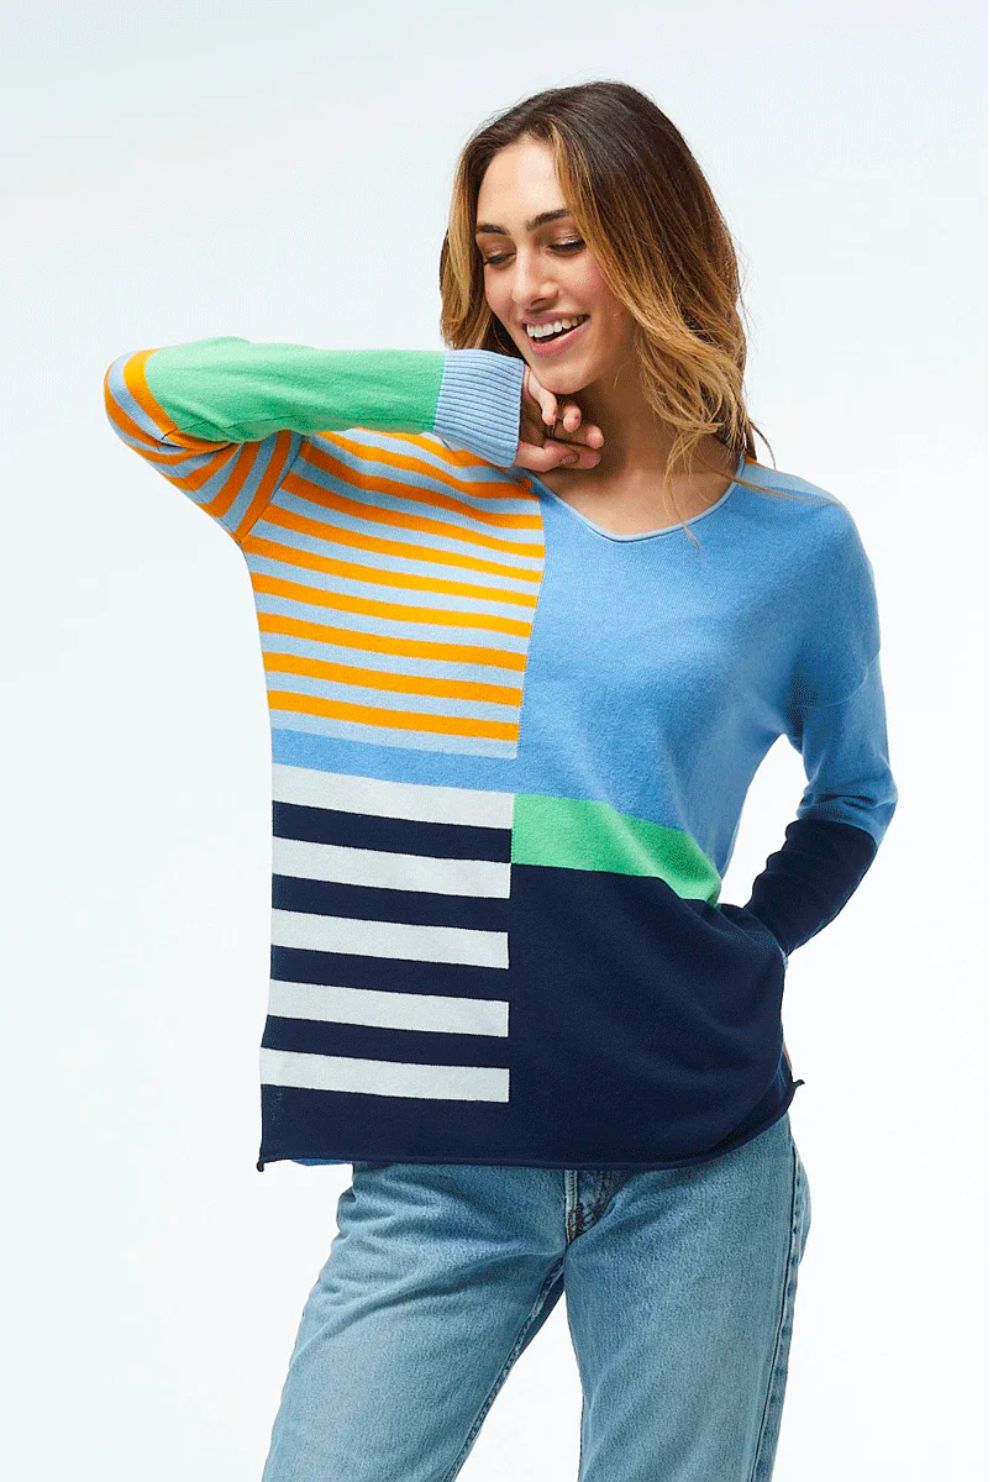 Zaket and Plover Fun Stripe Sweater | Style ZP4469U